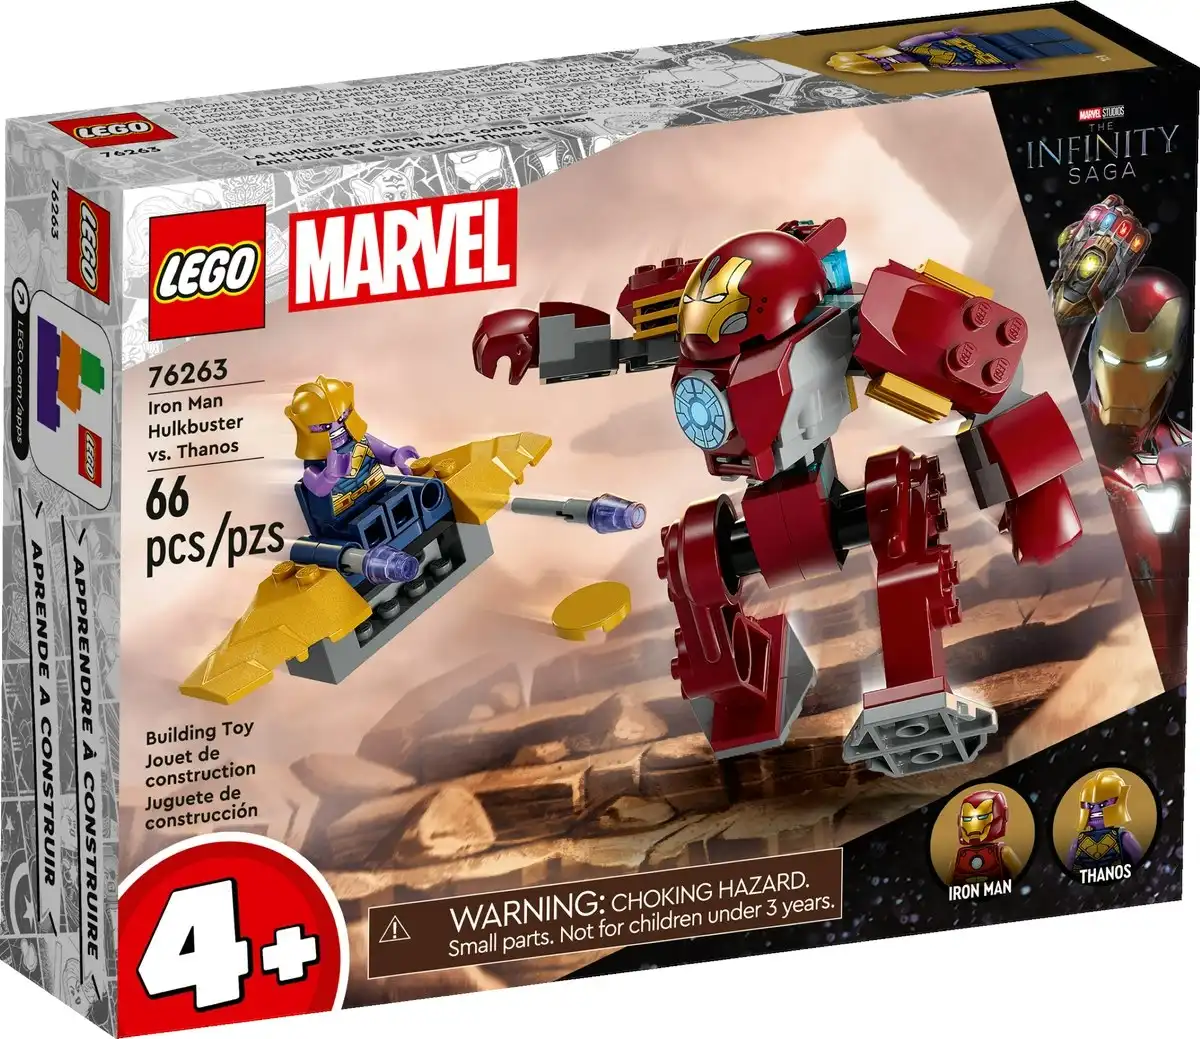 LEGO 76263 Iron Man Hulkbuster vs. Thanos - Marvel Super Heroes